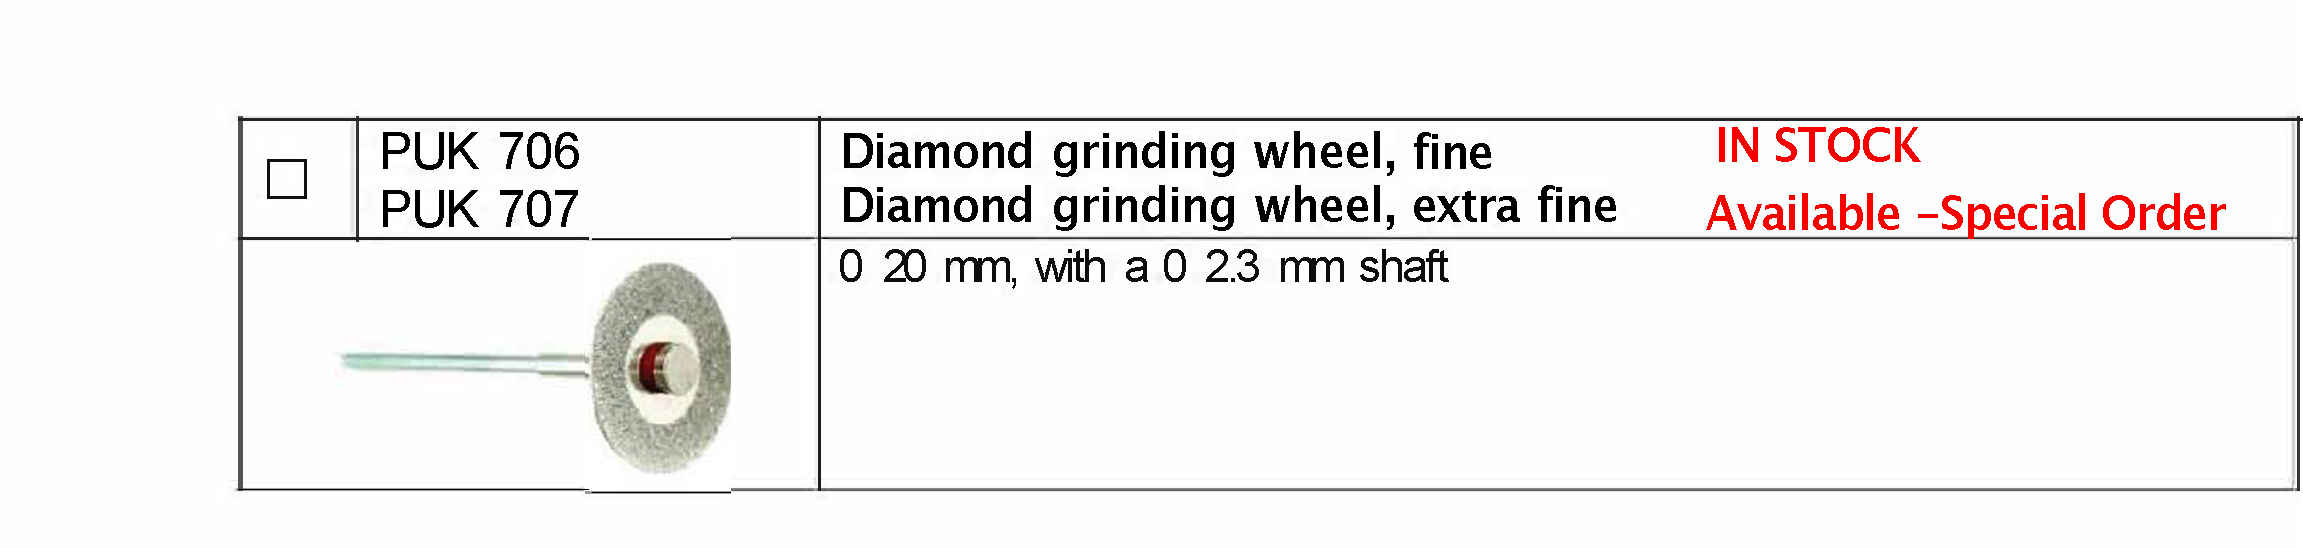 PUK-707: Diamond Grinding Wheel - Extra Fine